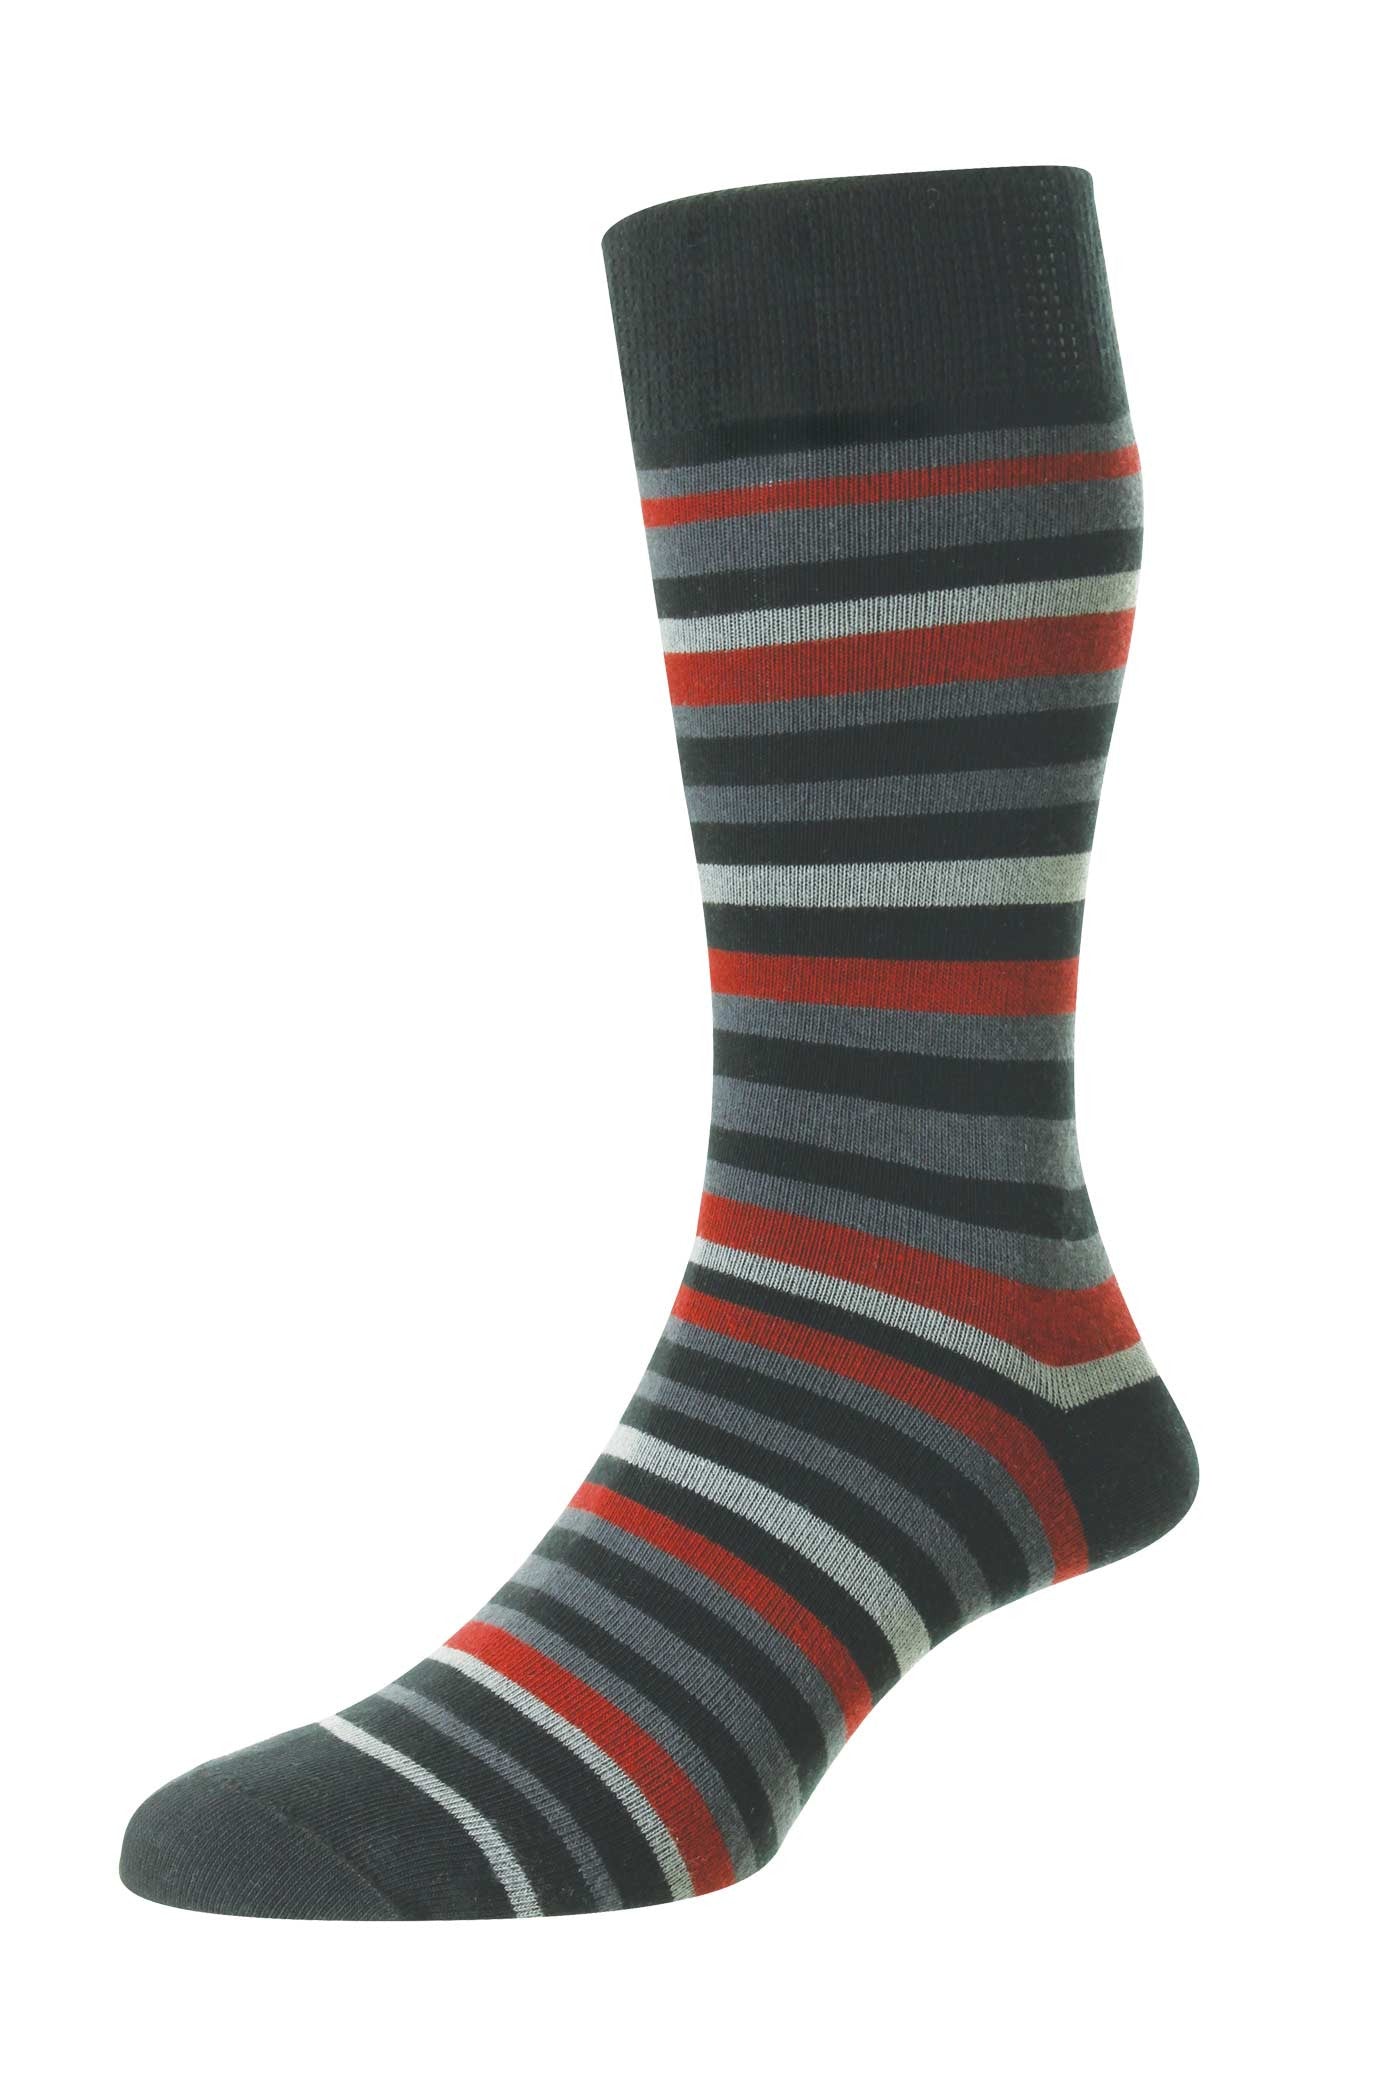 HJ Hall Organic Cotton Comfort Top Socks - Black Multi Stripe HJ640_BLACK_6-11